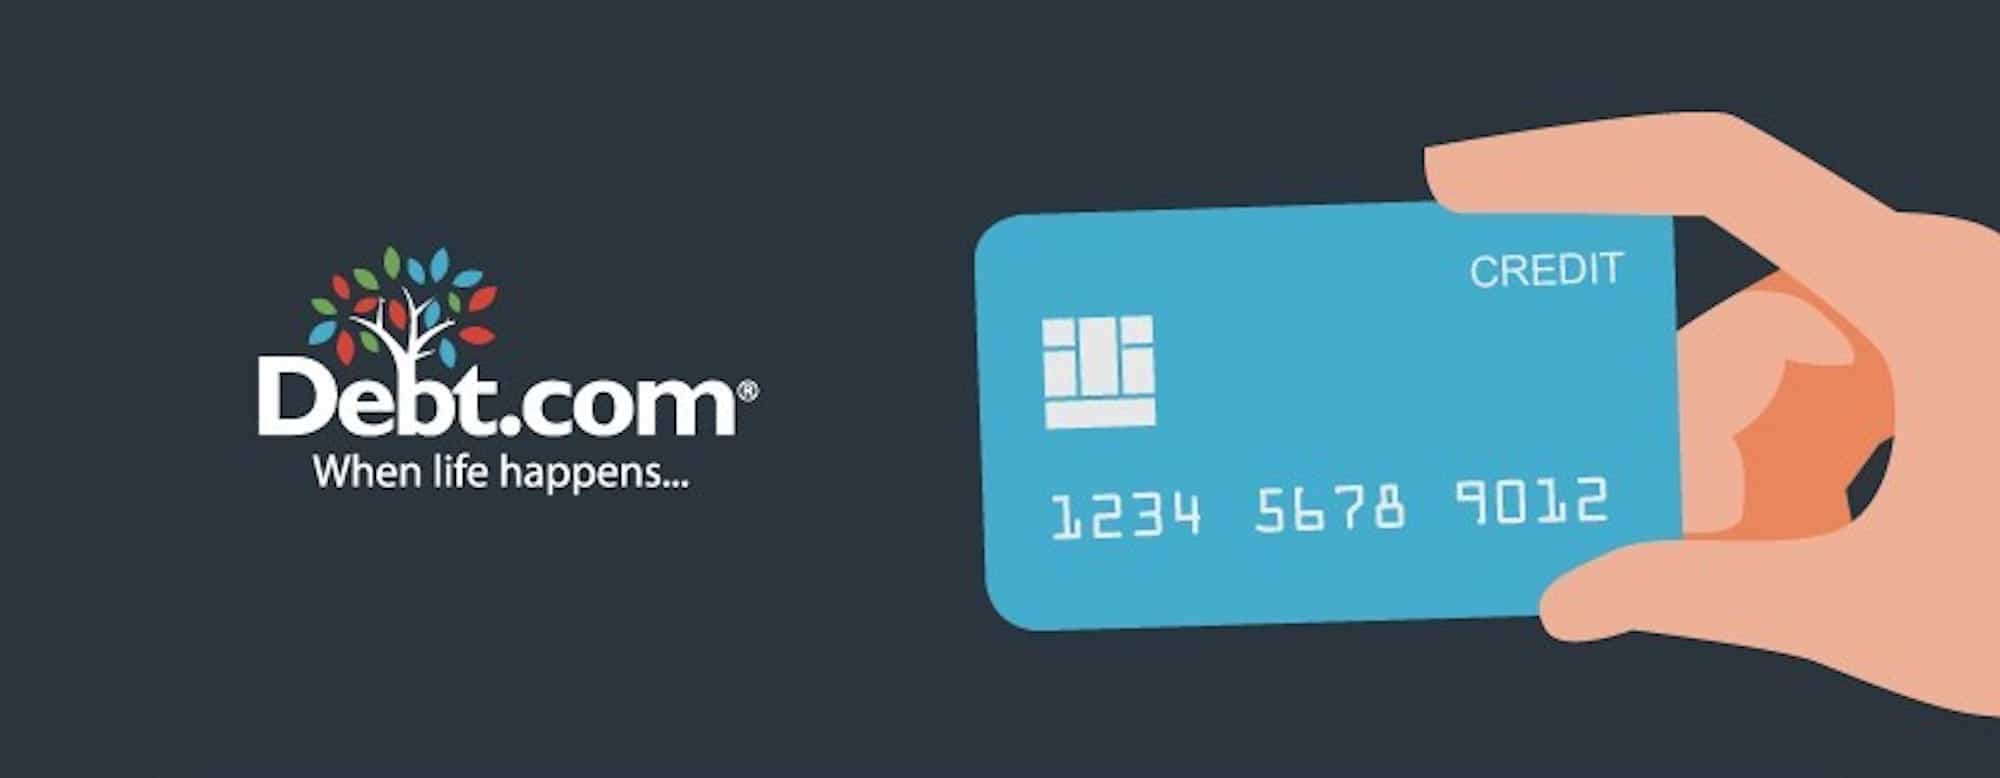 Debt.com credit card survey